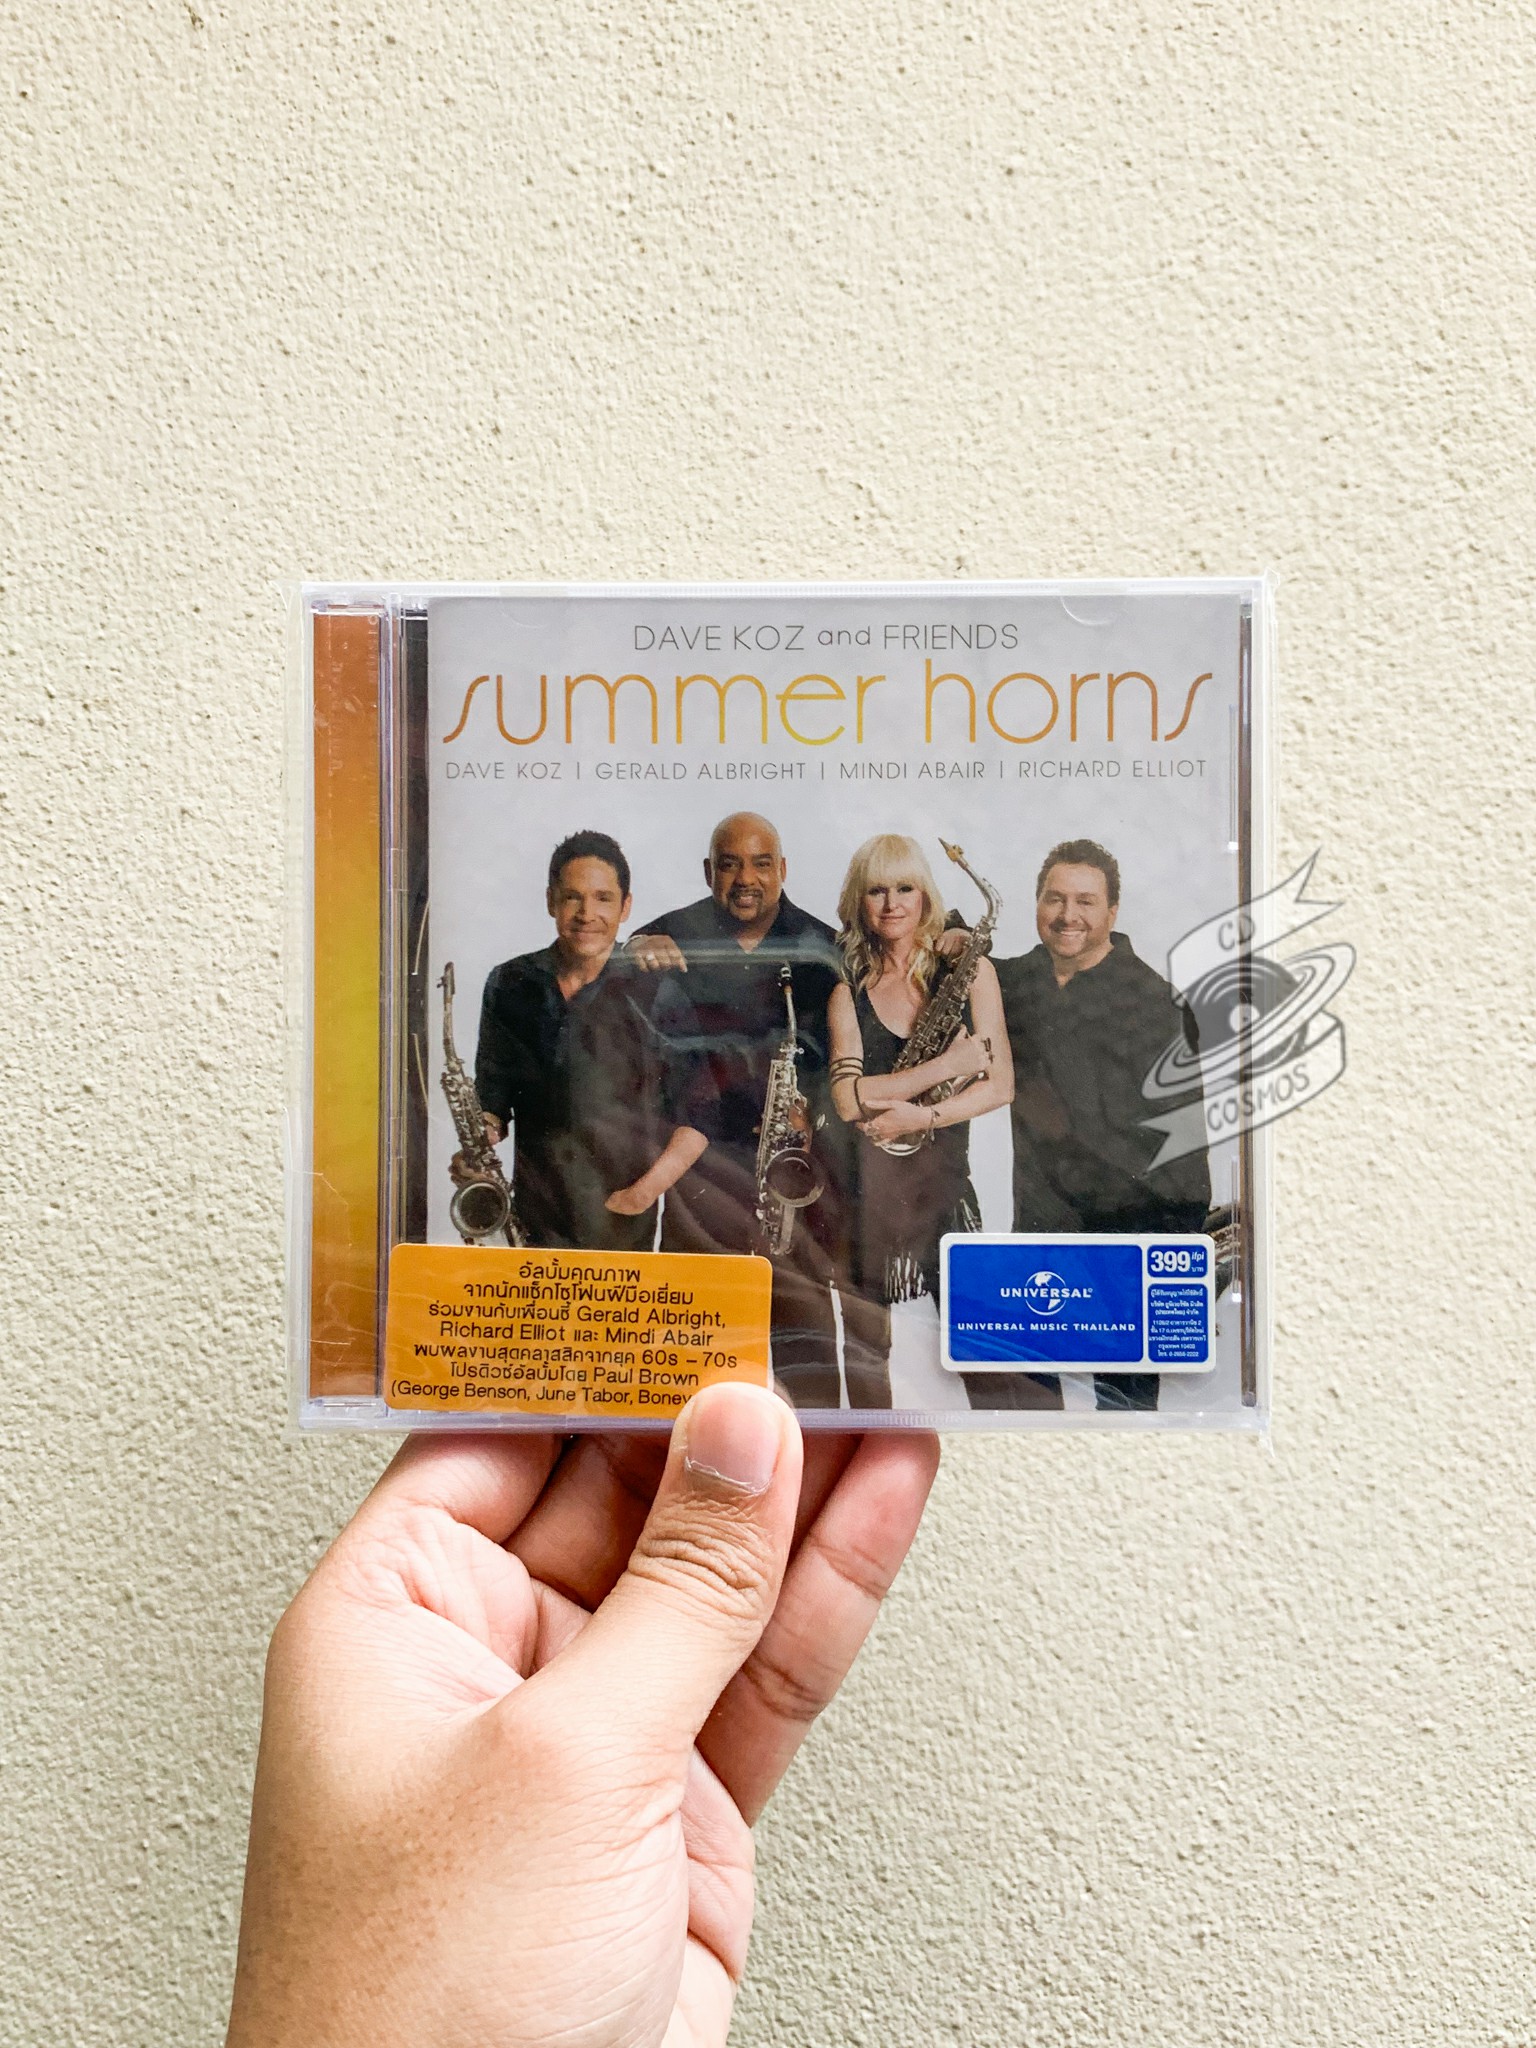 Dave Koz And Friends Summer Horns cdcosmos